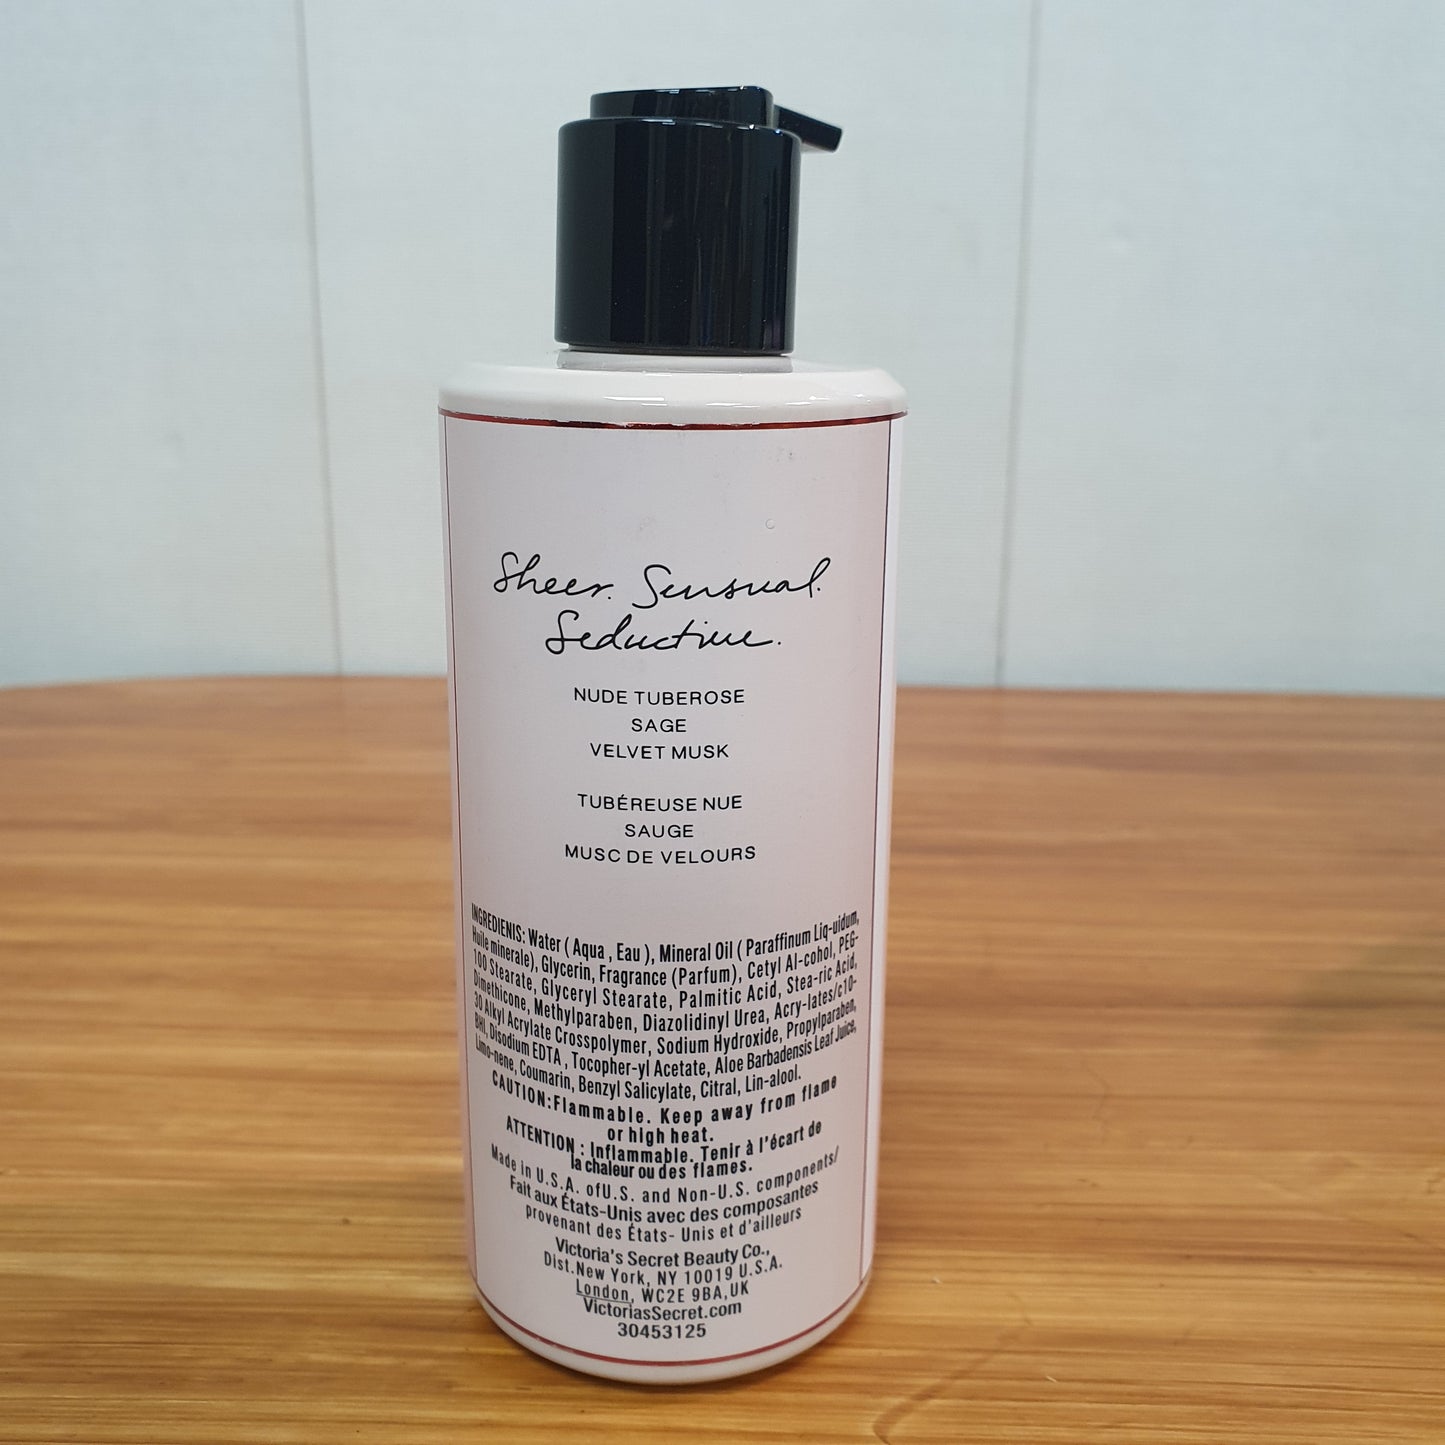 Victoria's Secret Fine Fragrance Body Lotion 8.4 Oz / 250 Ml New